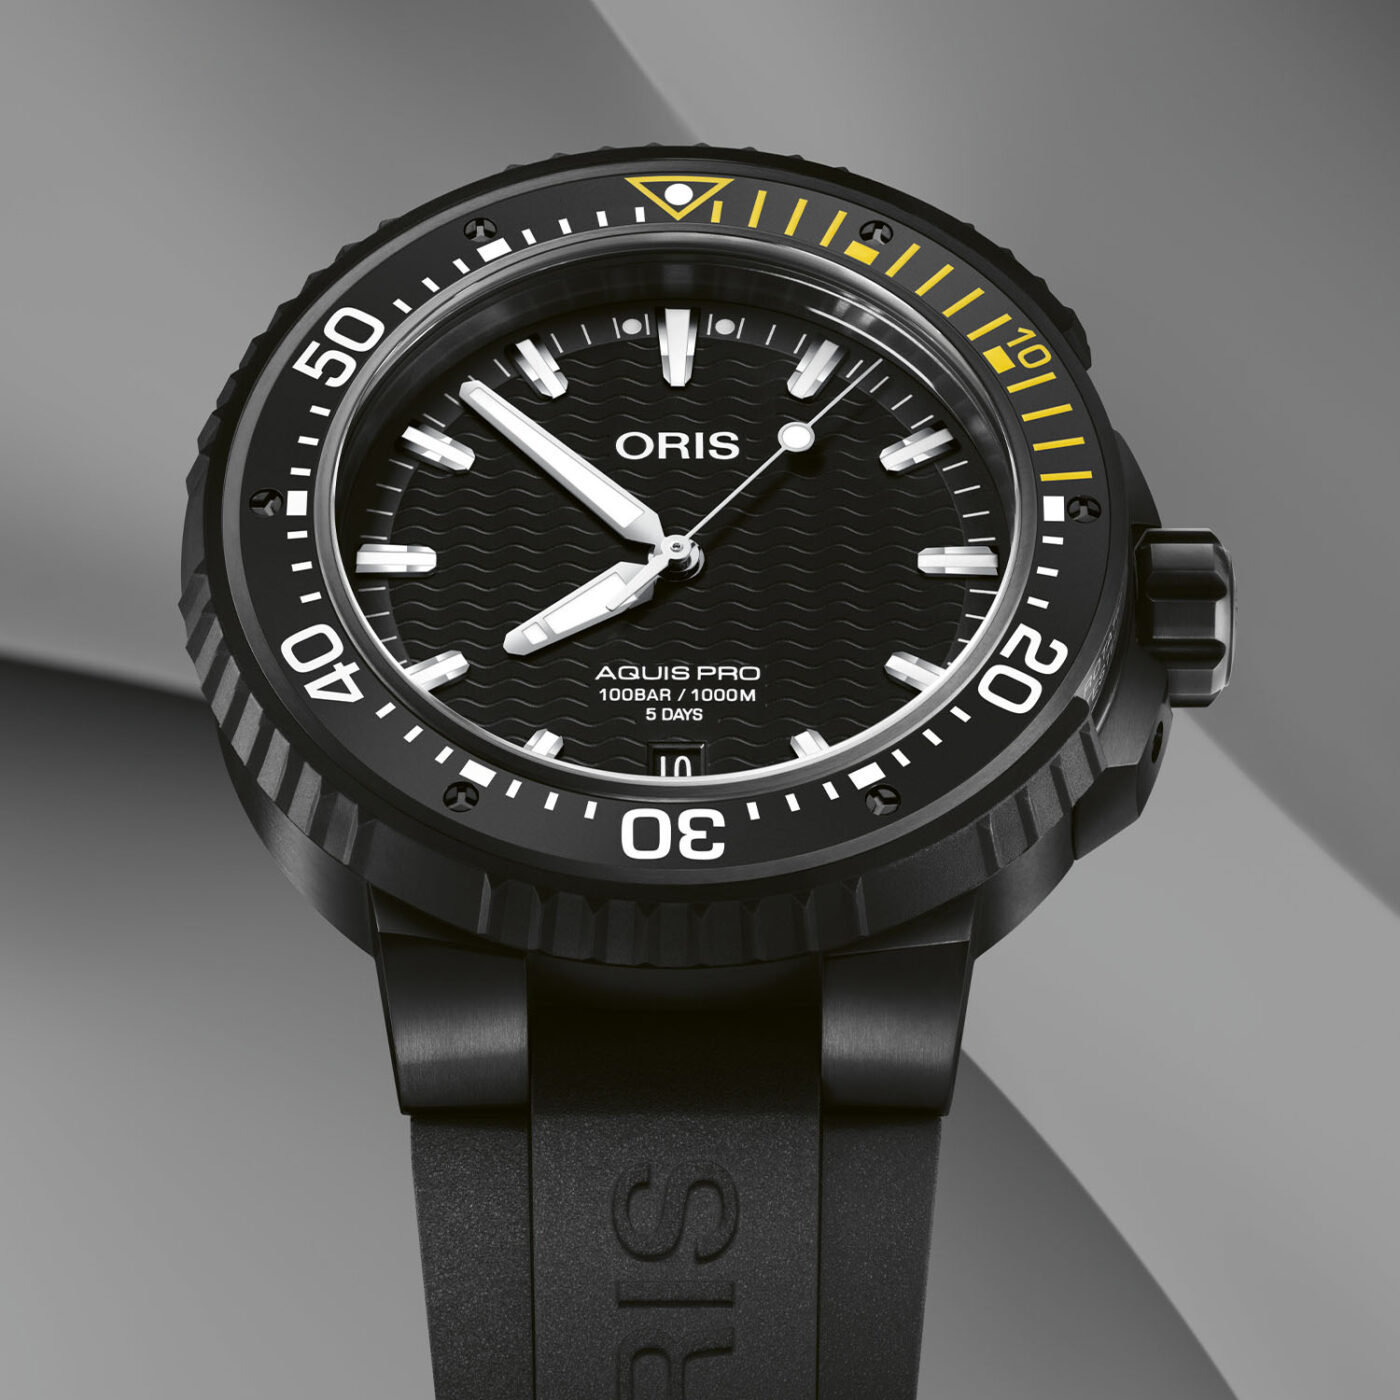 Introducing The Oris AquisPro Date Calibre 400 Watch